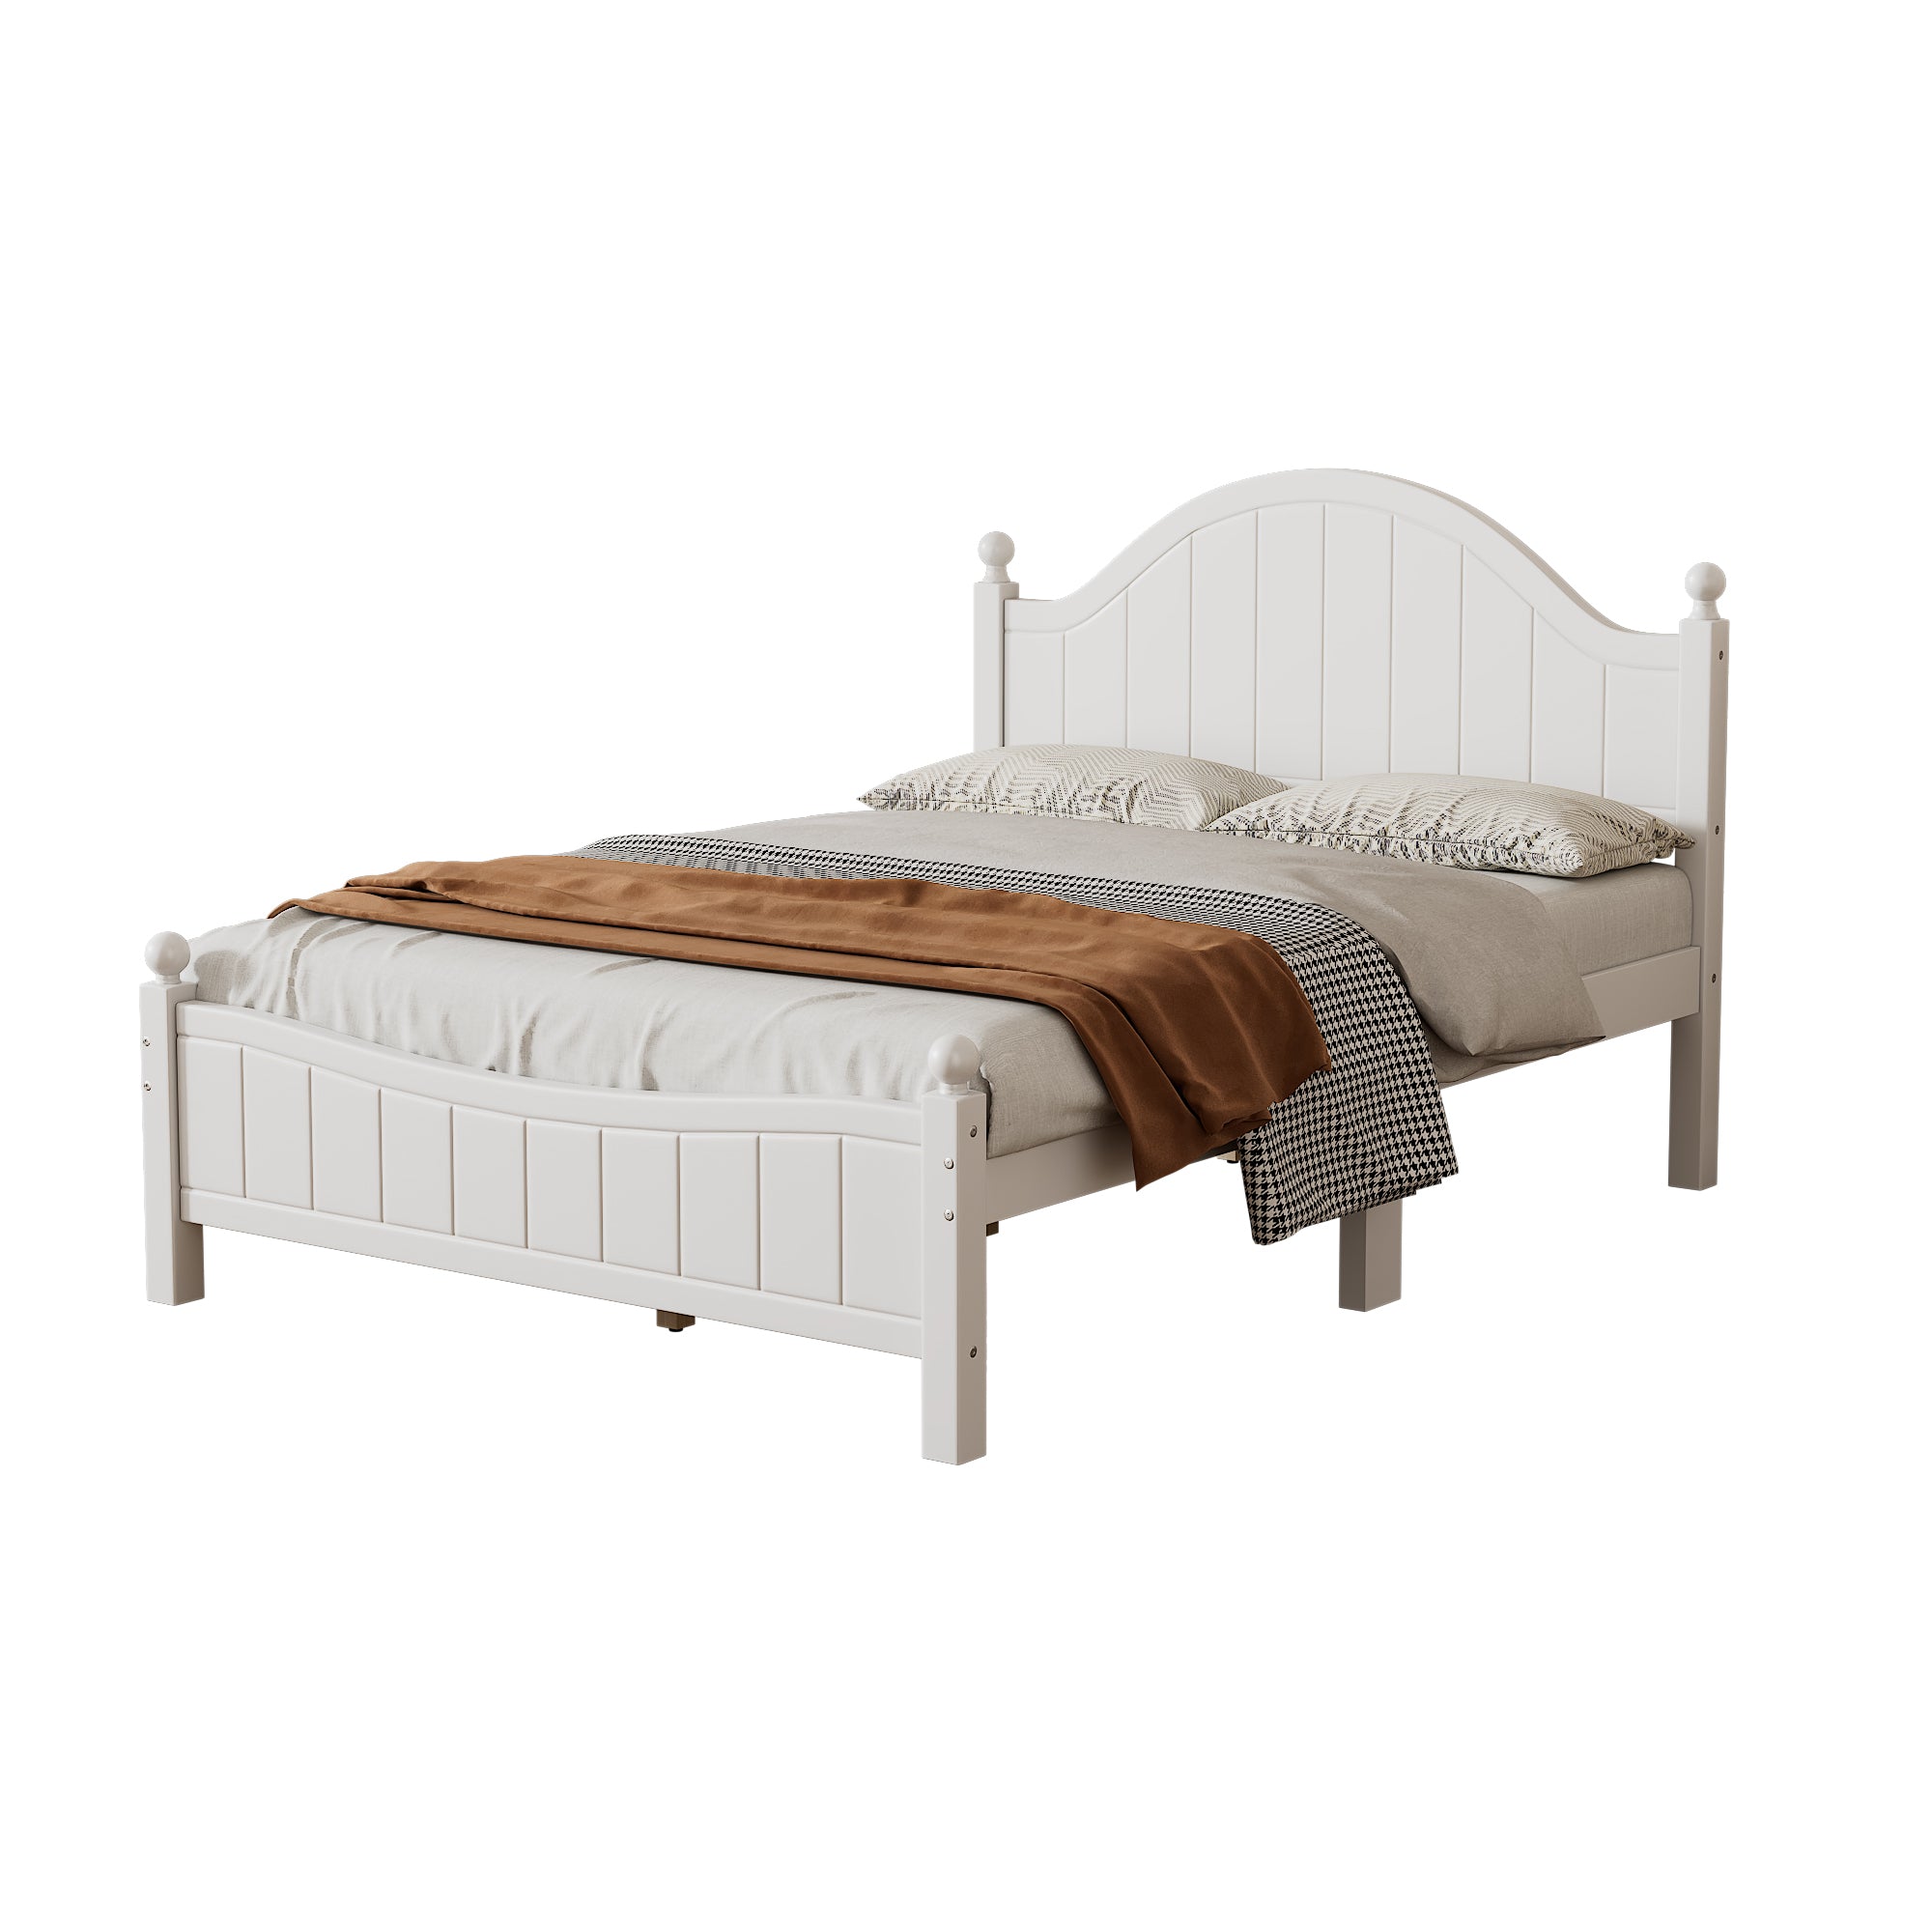 Bellemave® Traditional Concise Style Solid Wood Platform Bed Bellemave®